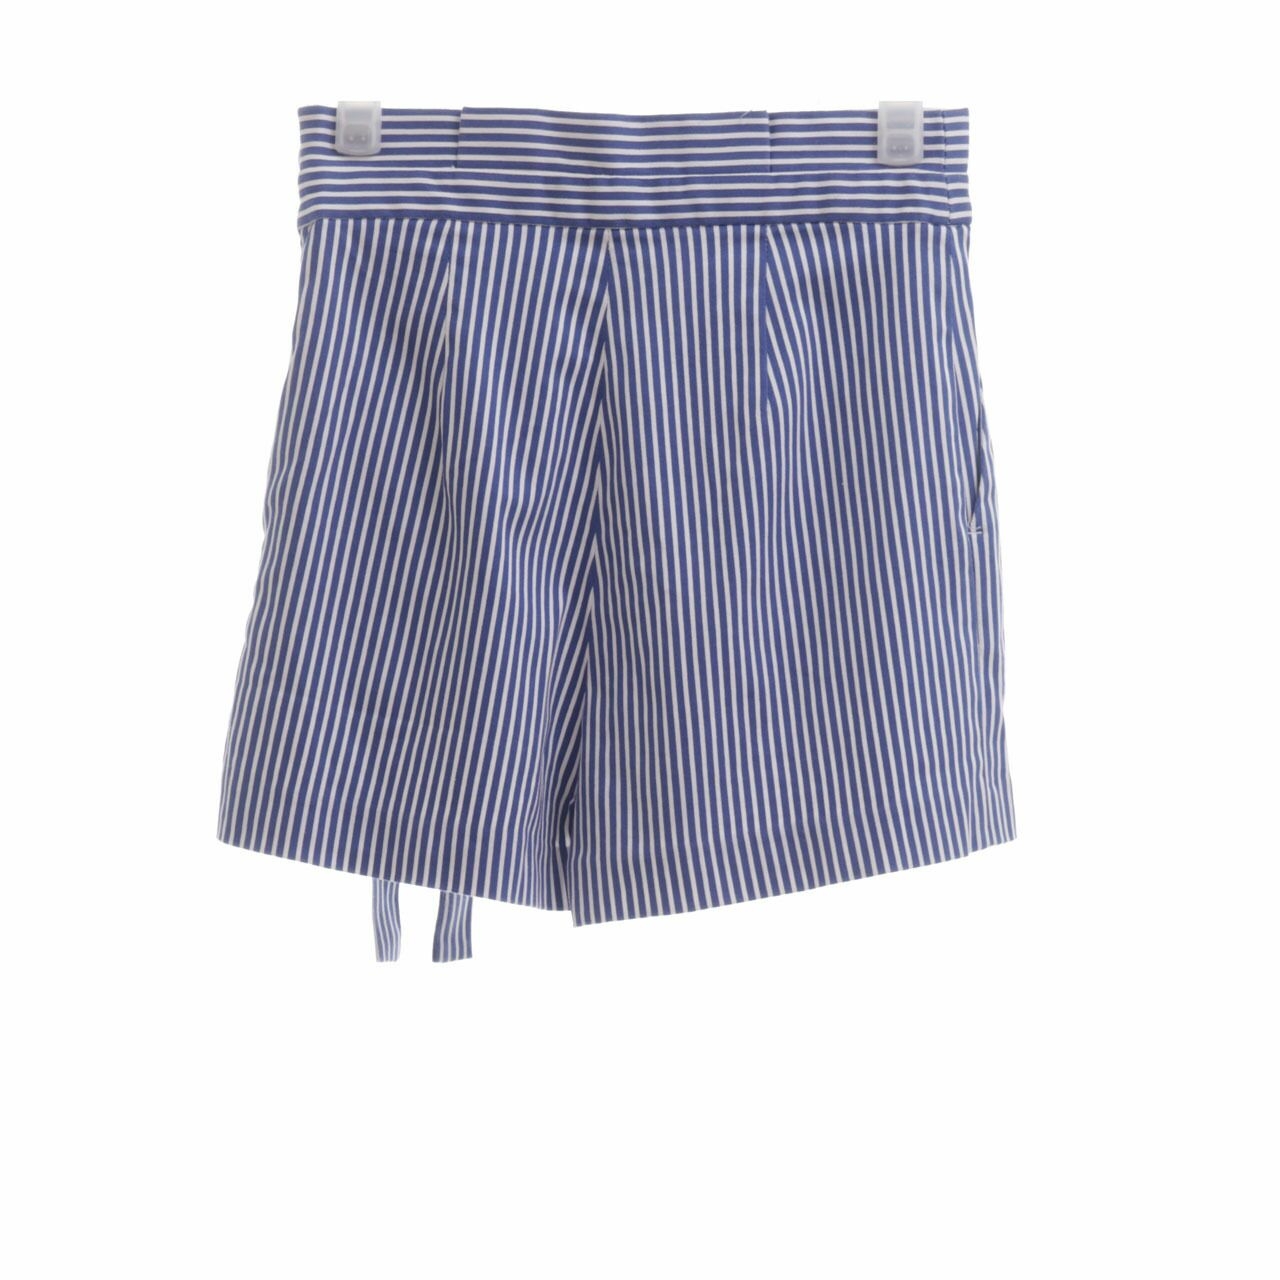 Jaspal Blue & White Stripes Shorts Pants 